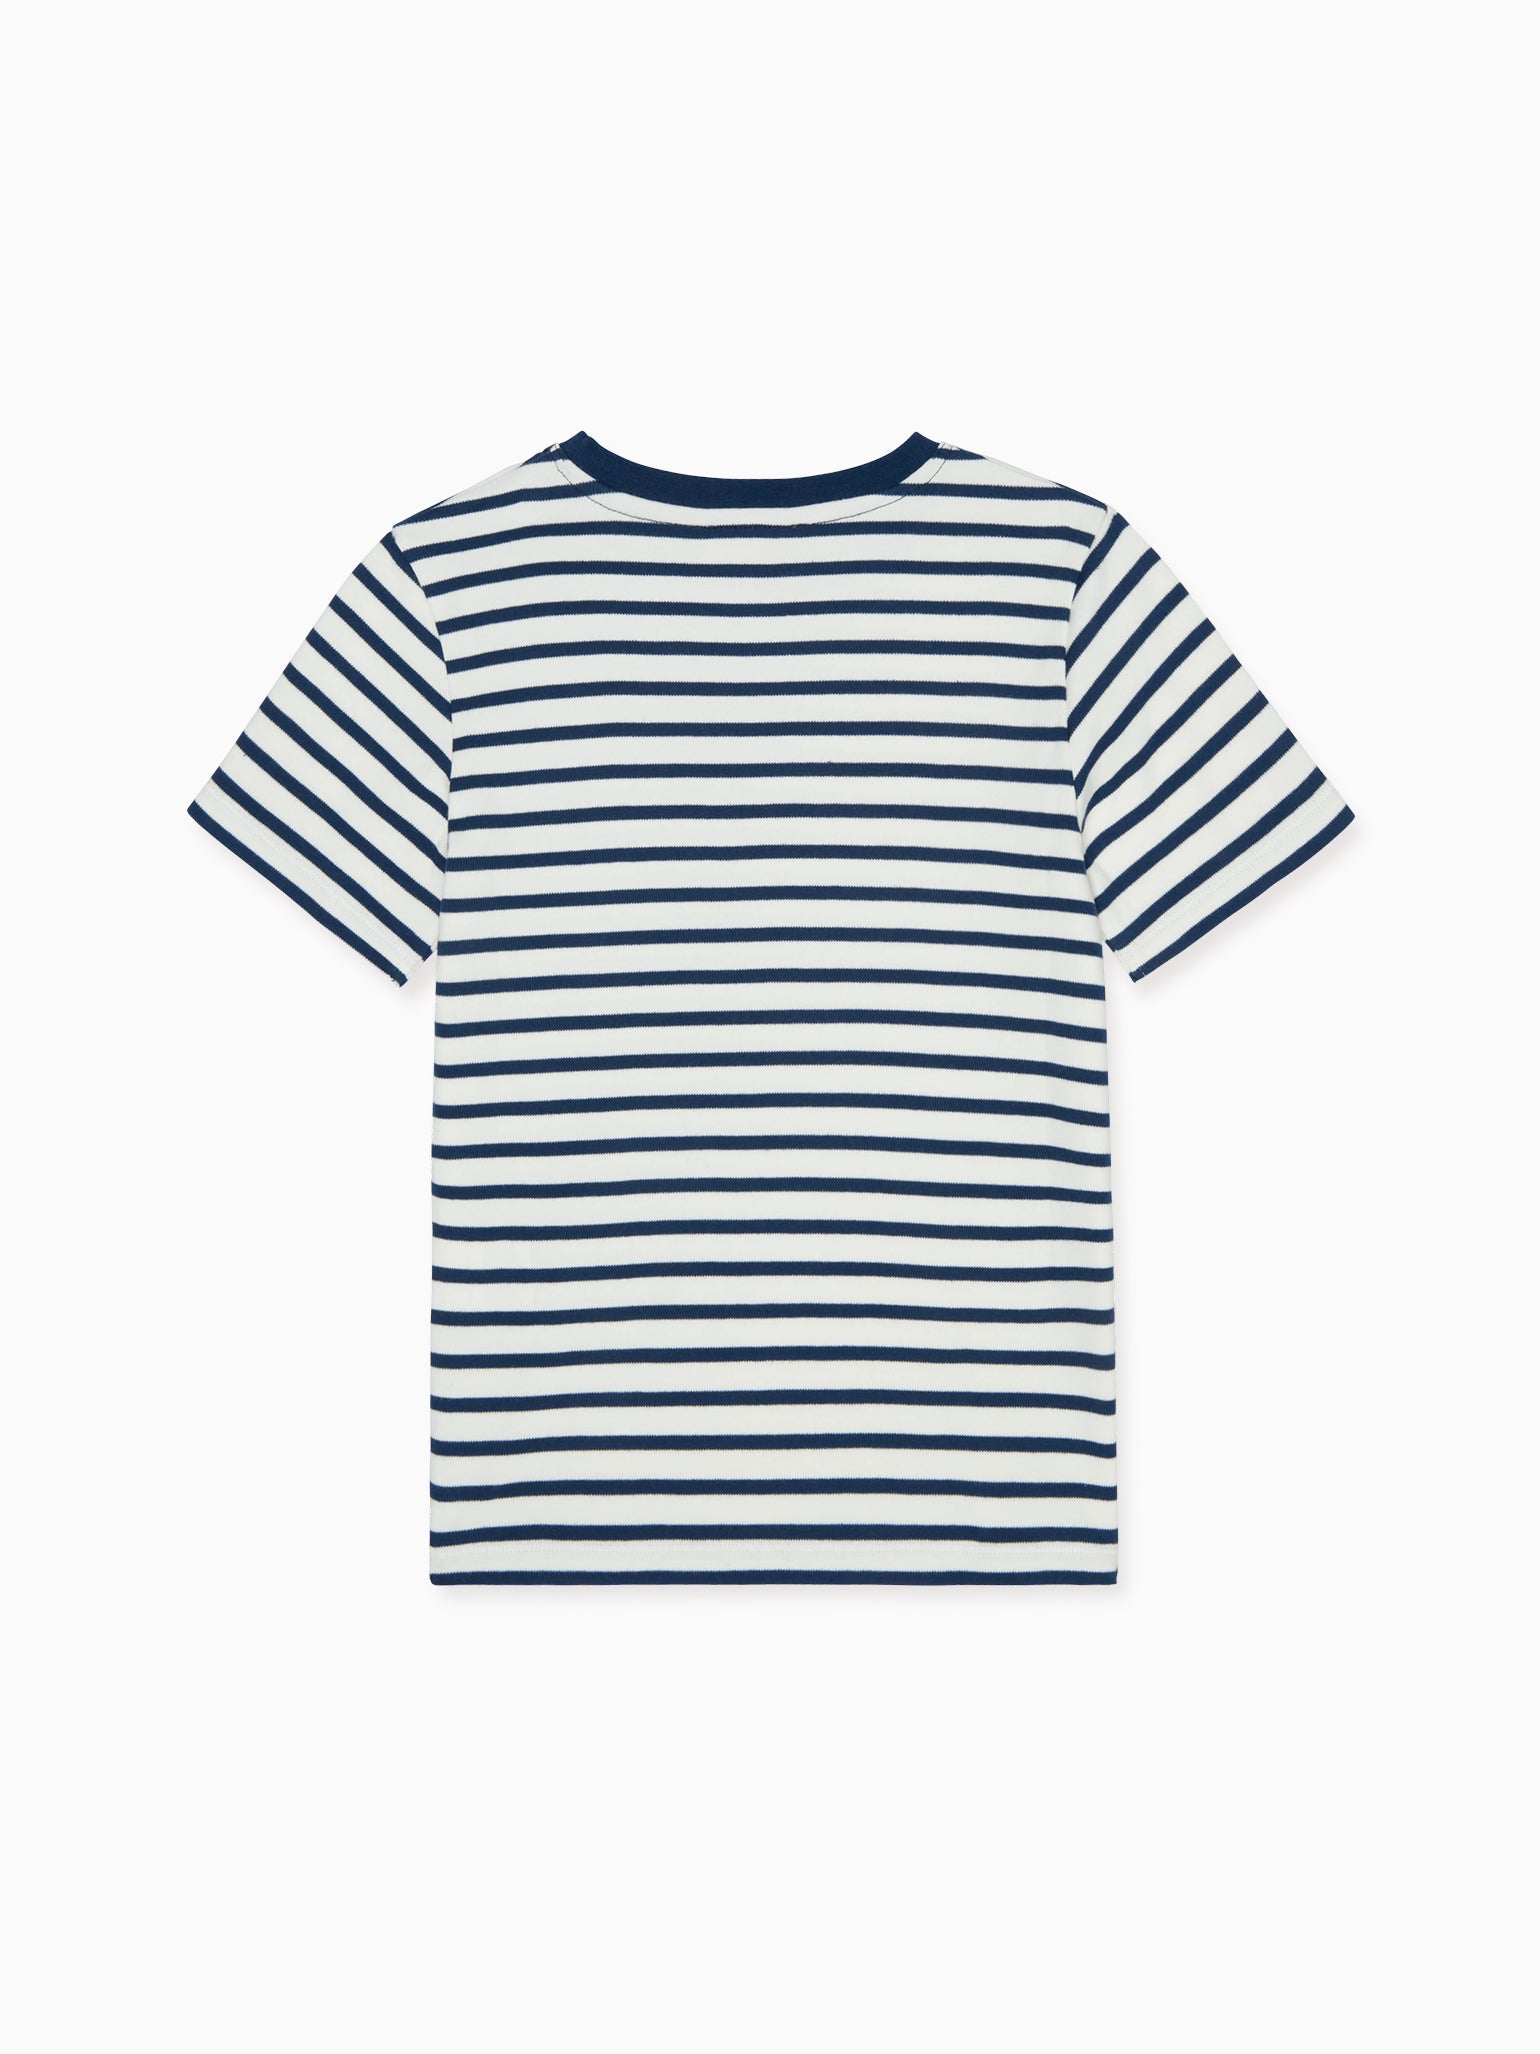 Navy Stripe Arturo Kids Cotton T-Shirt